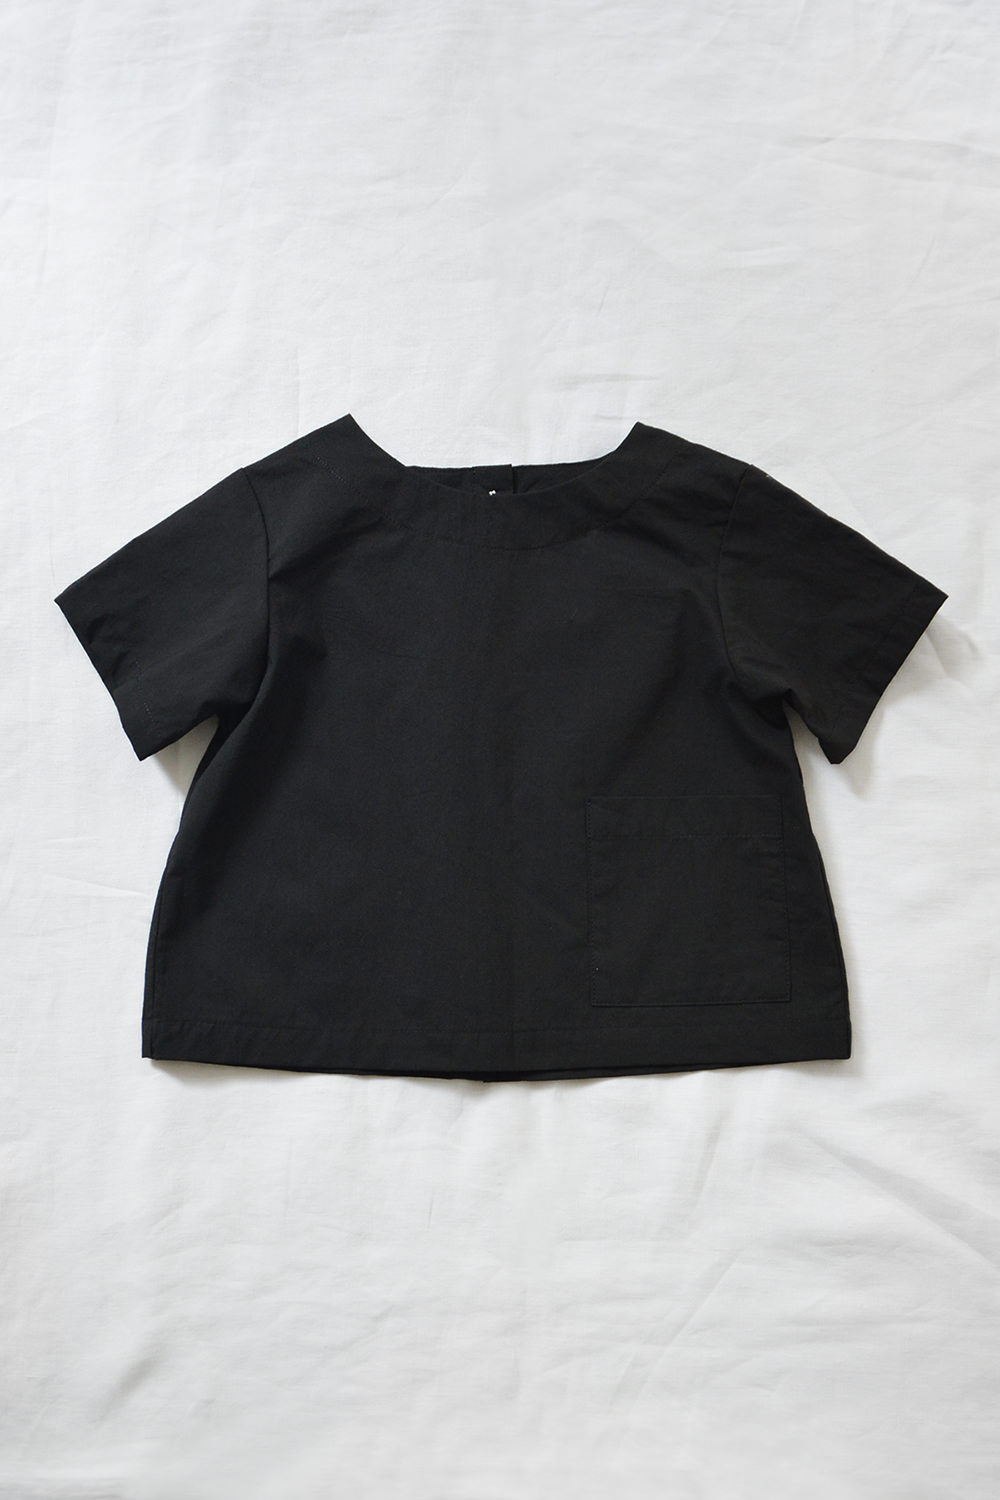 makie cotton shirt black top picture